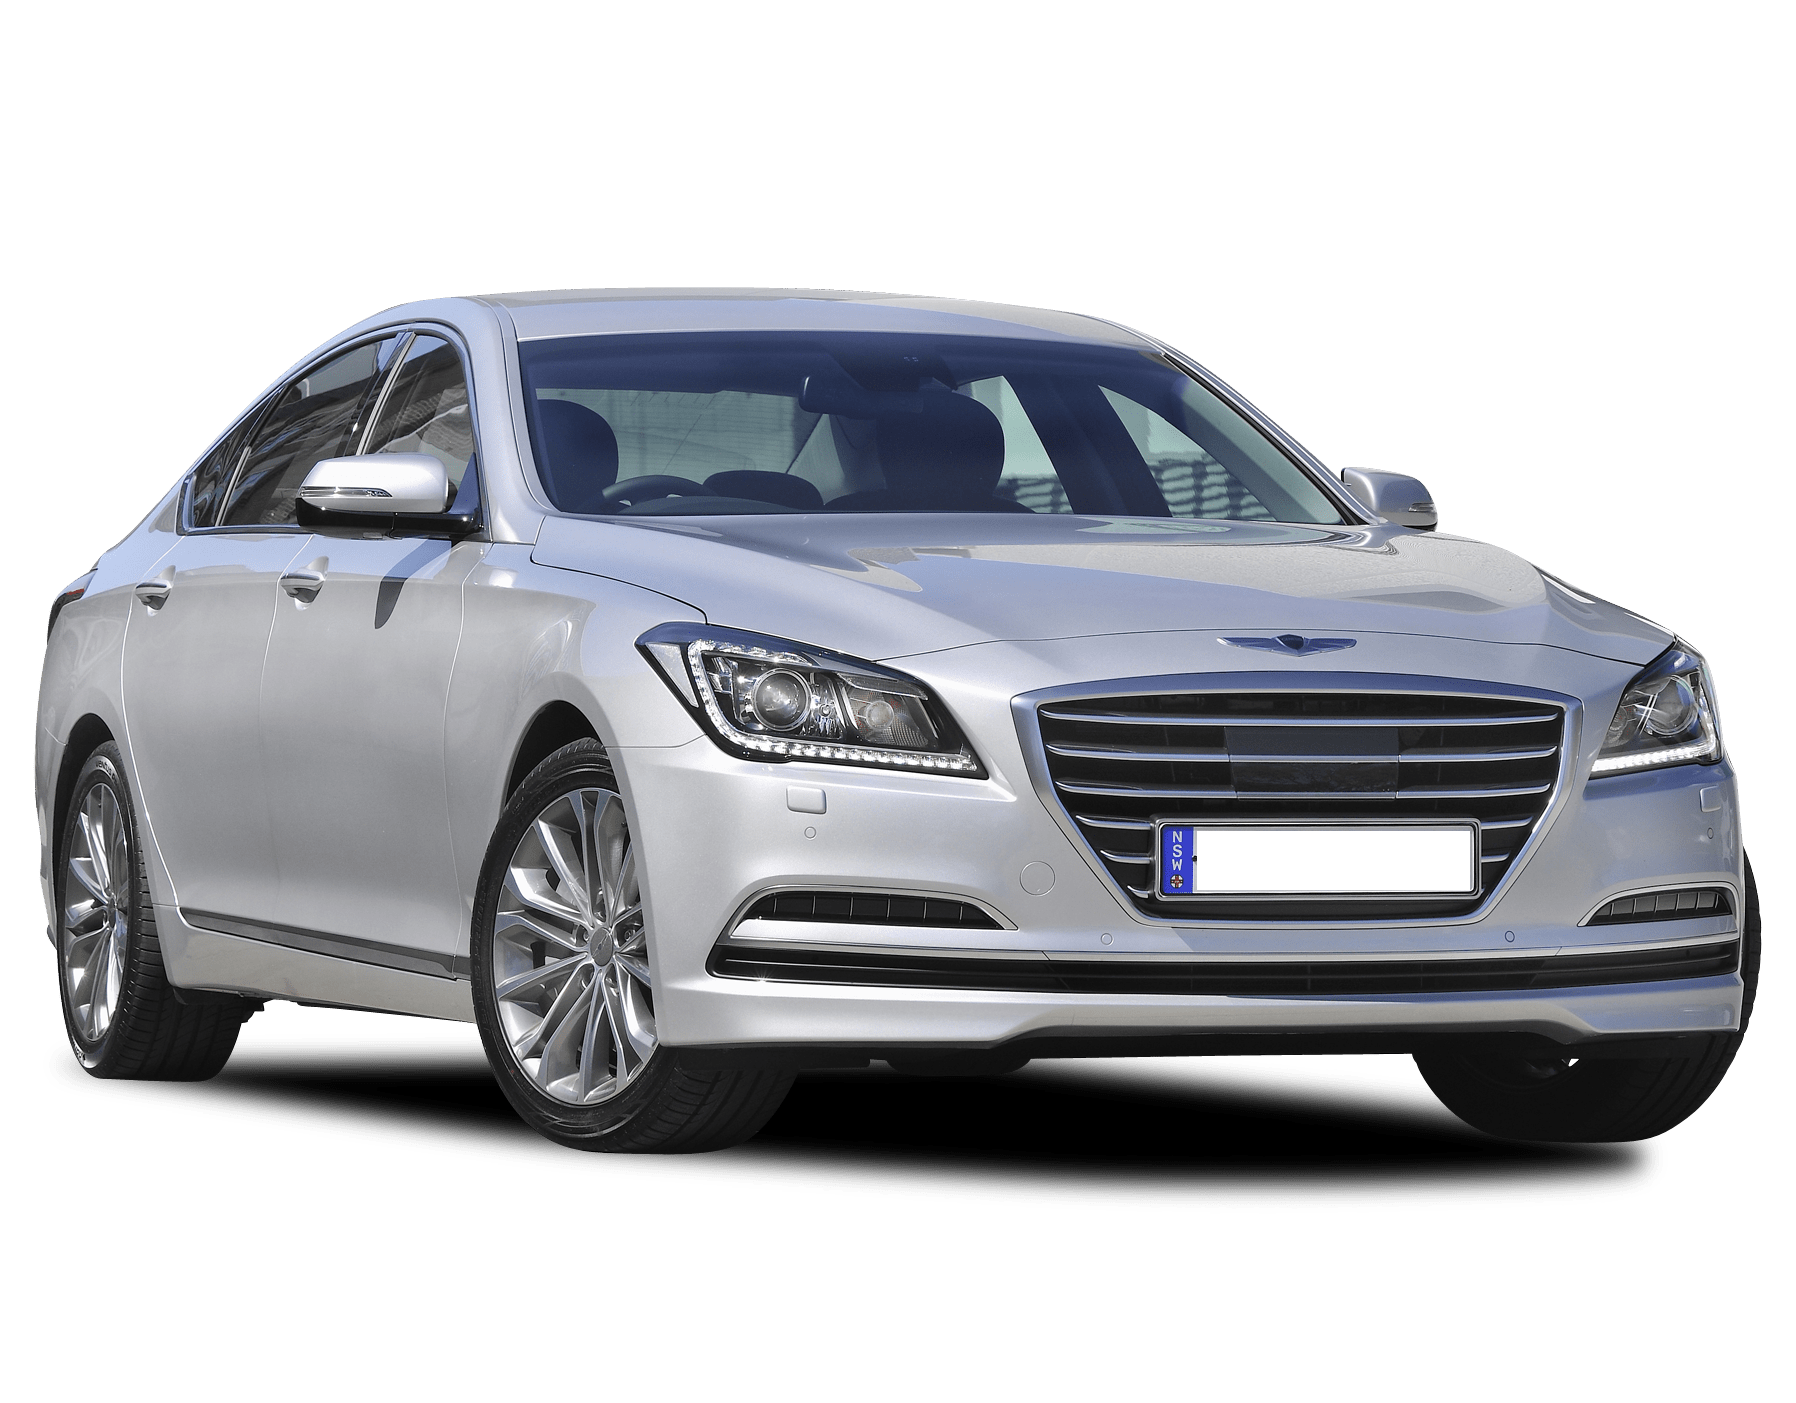 Hyundai Genesis Australia Review For Sale Interior Specs News Carsguide